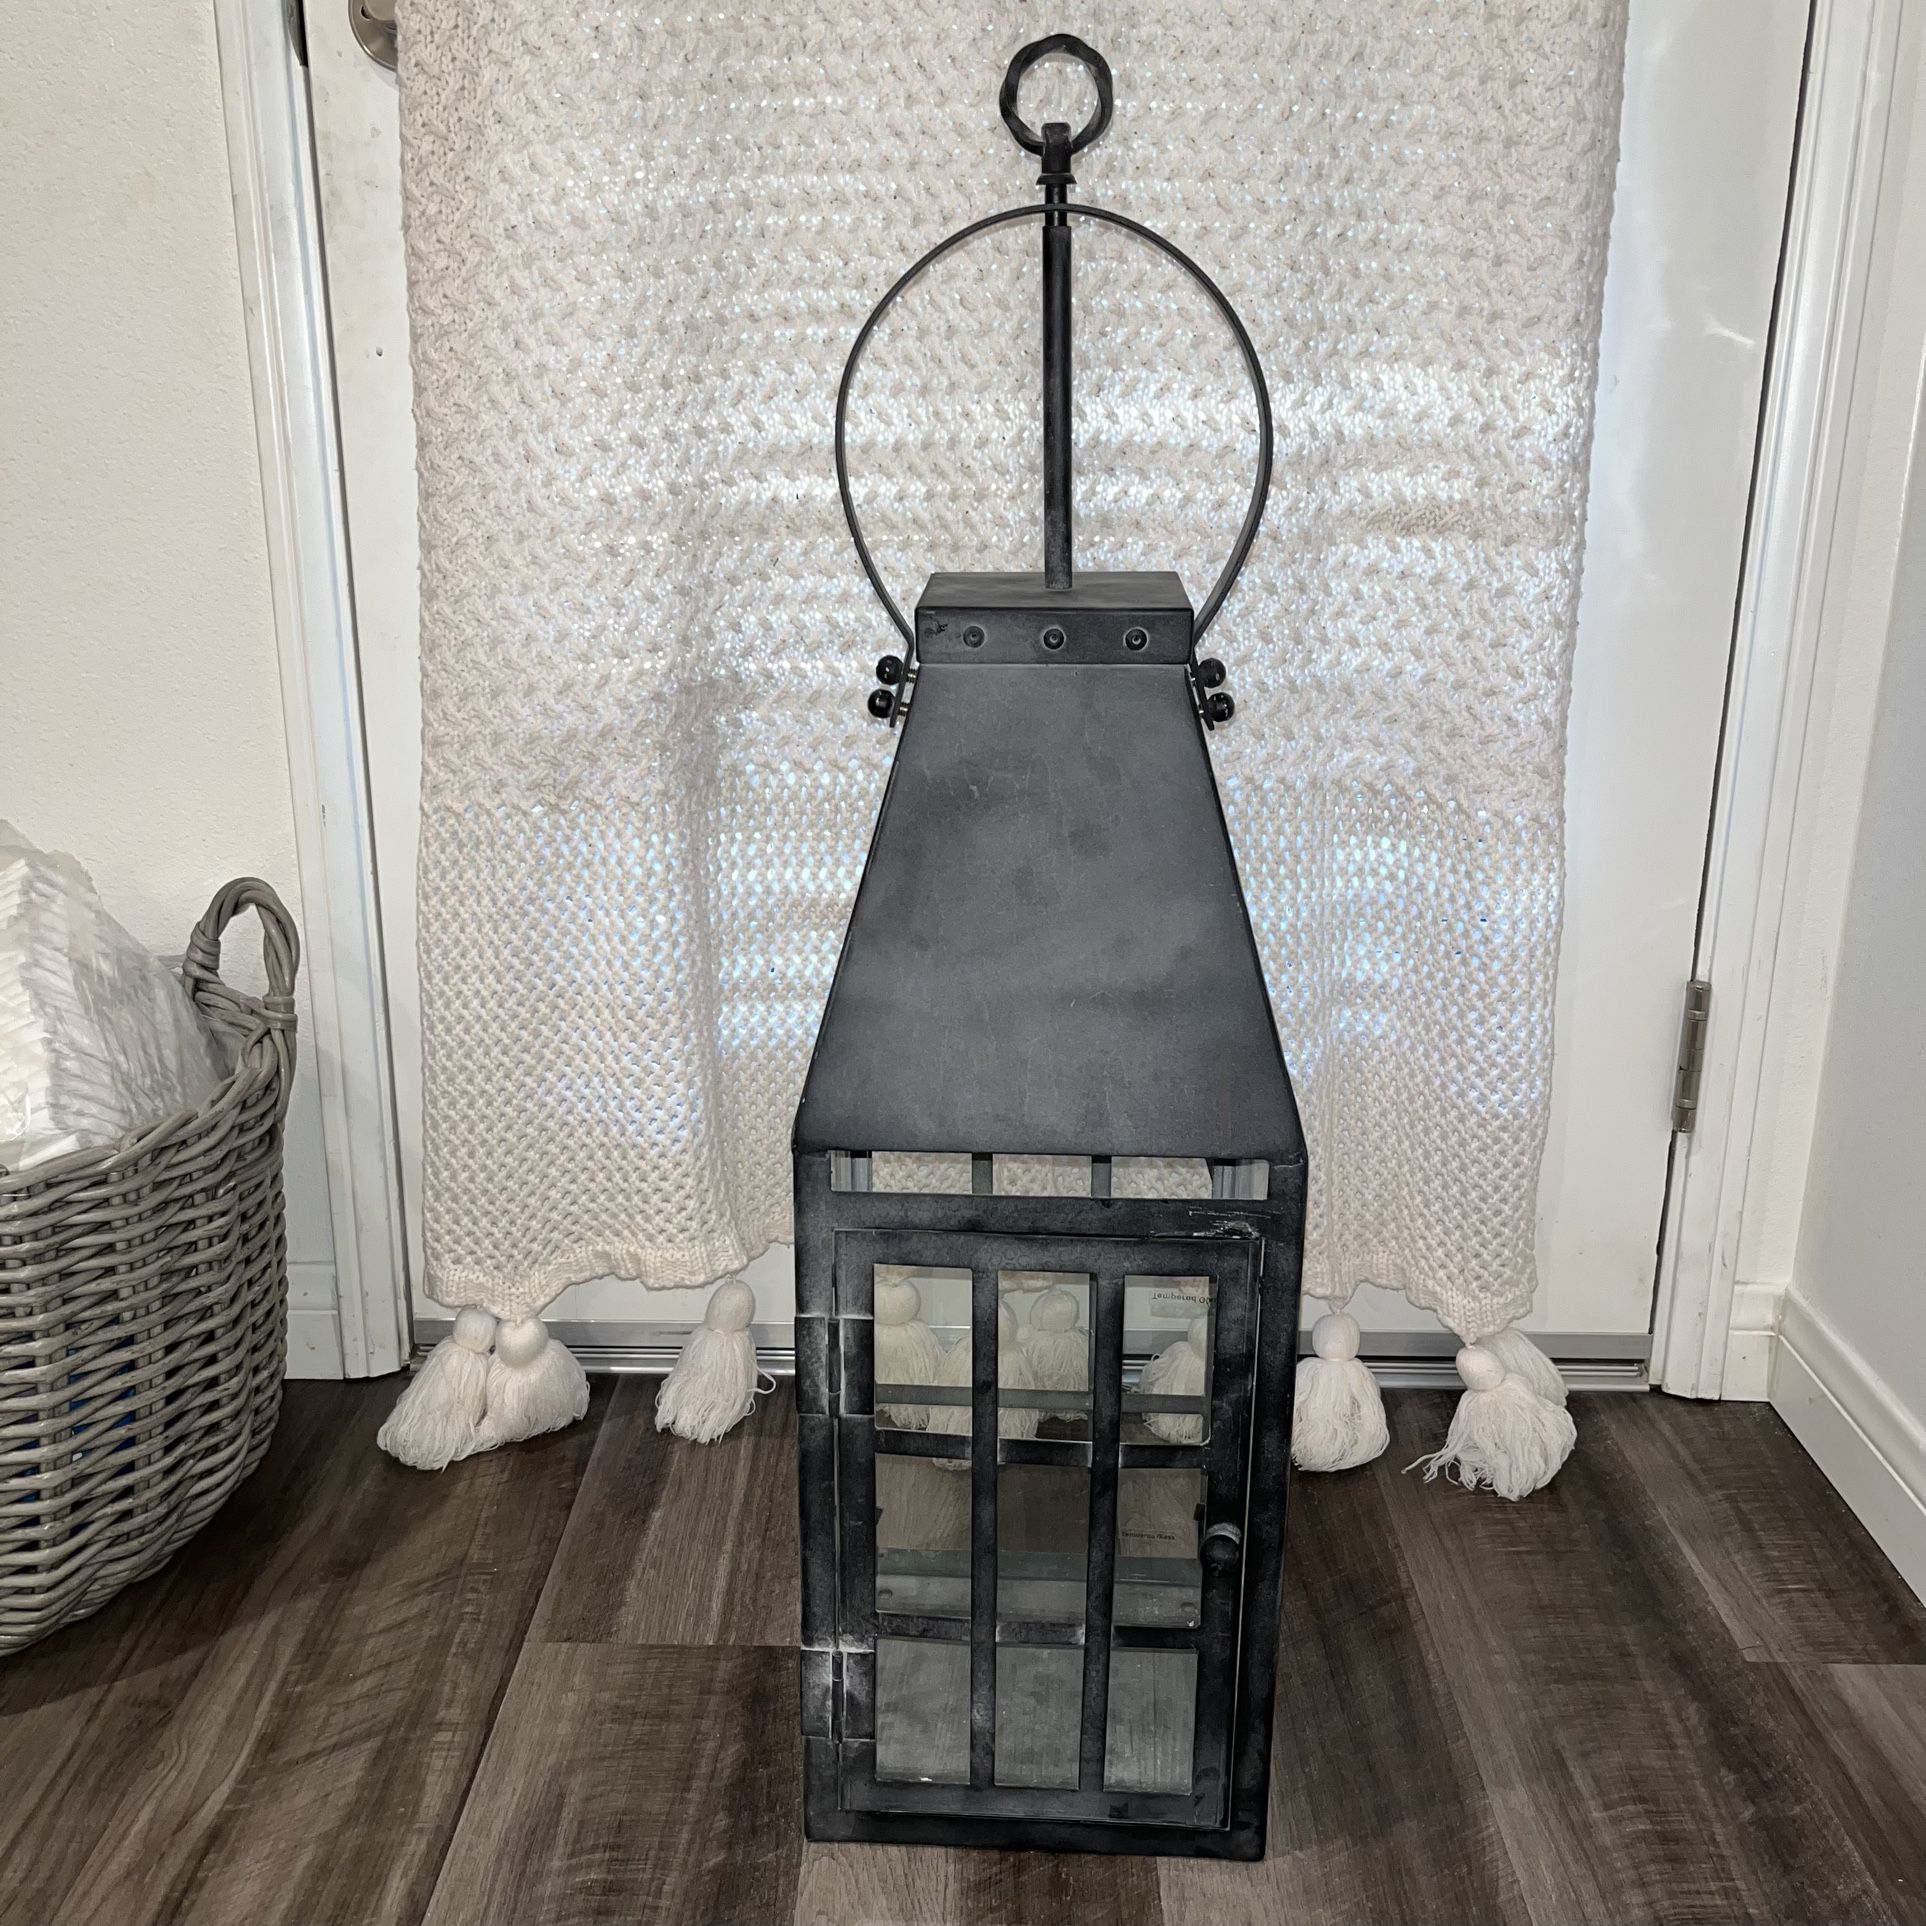 3 Foot Gray Black Decorative Glass & Metal Home Lantern $50 